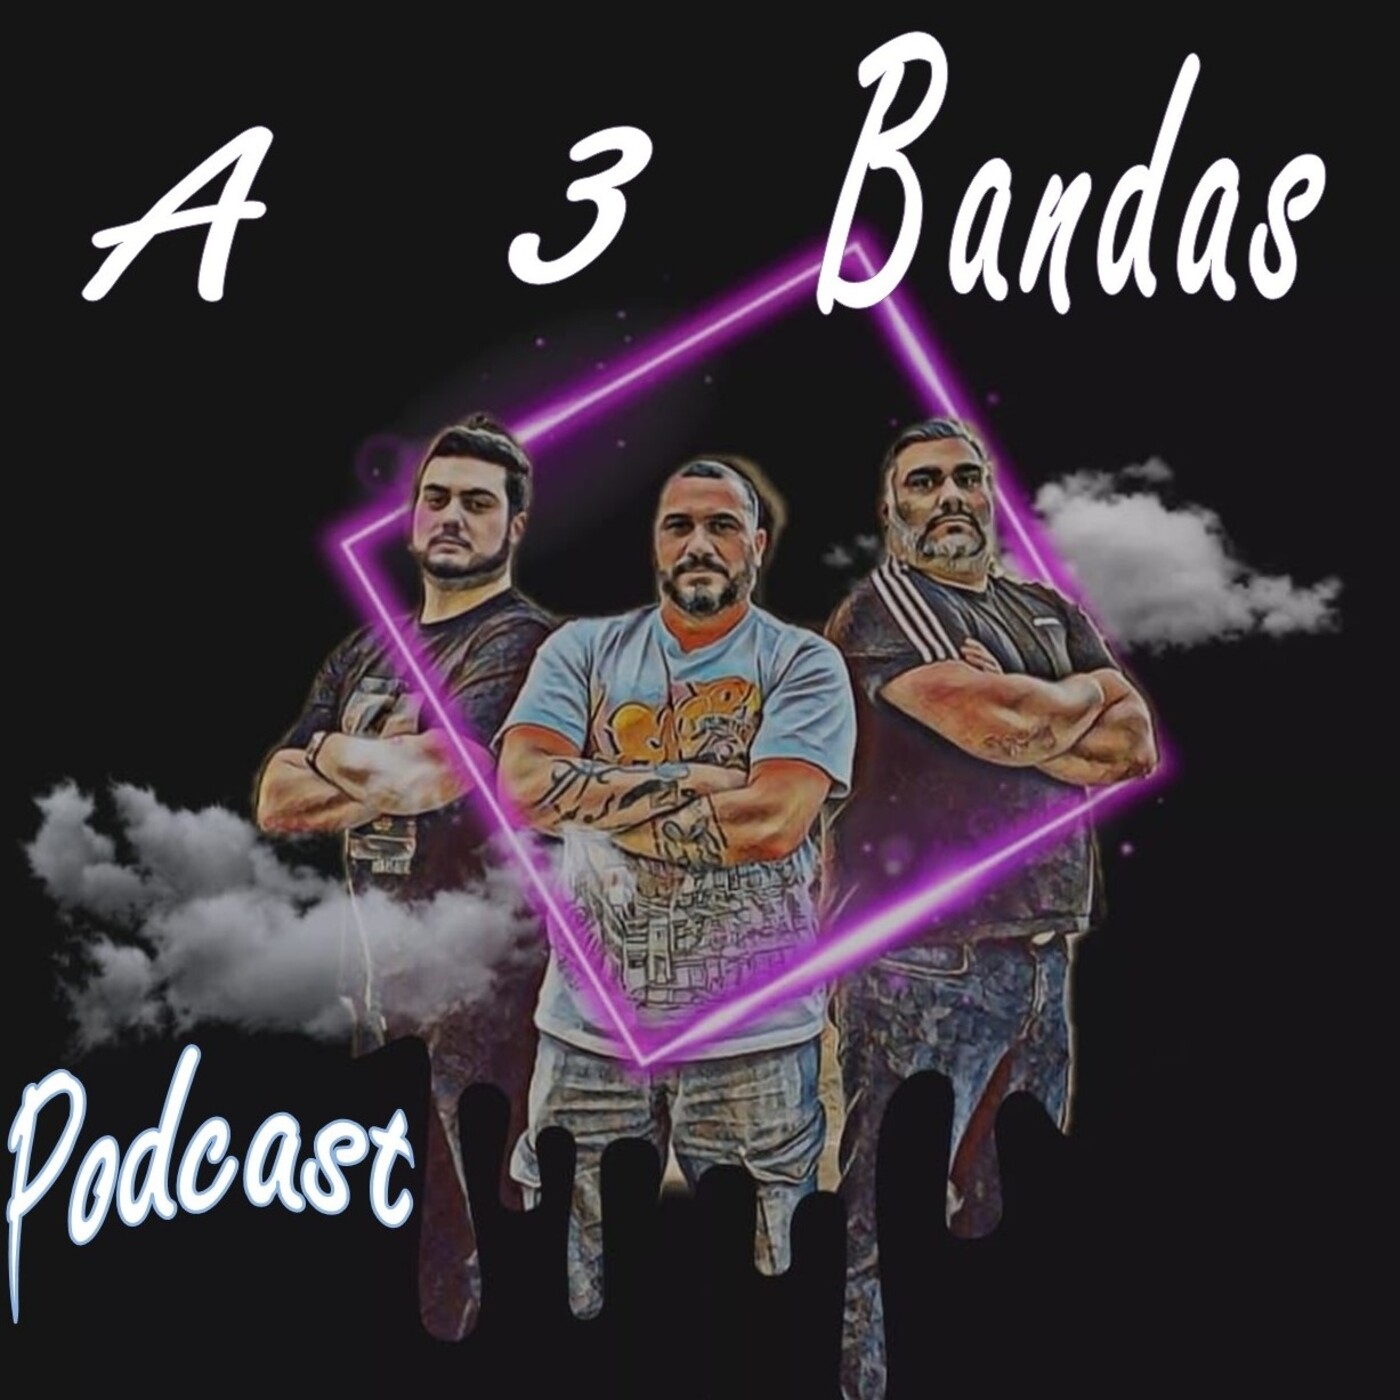 A 3 Bandas